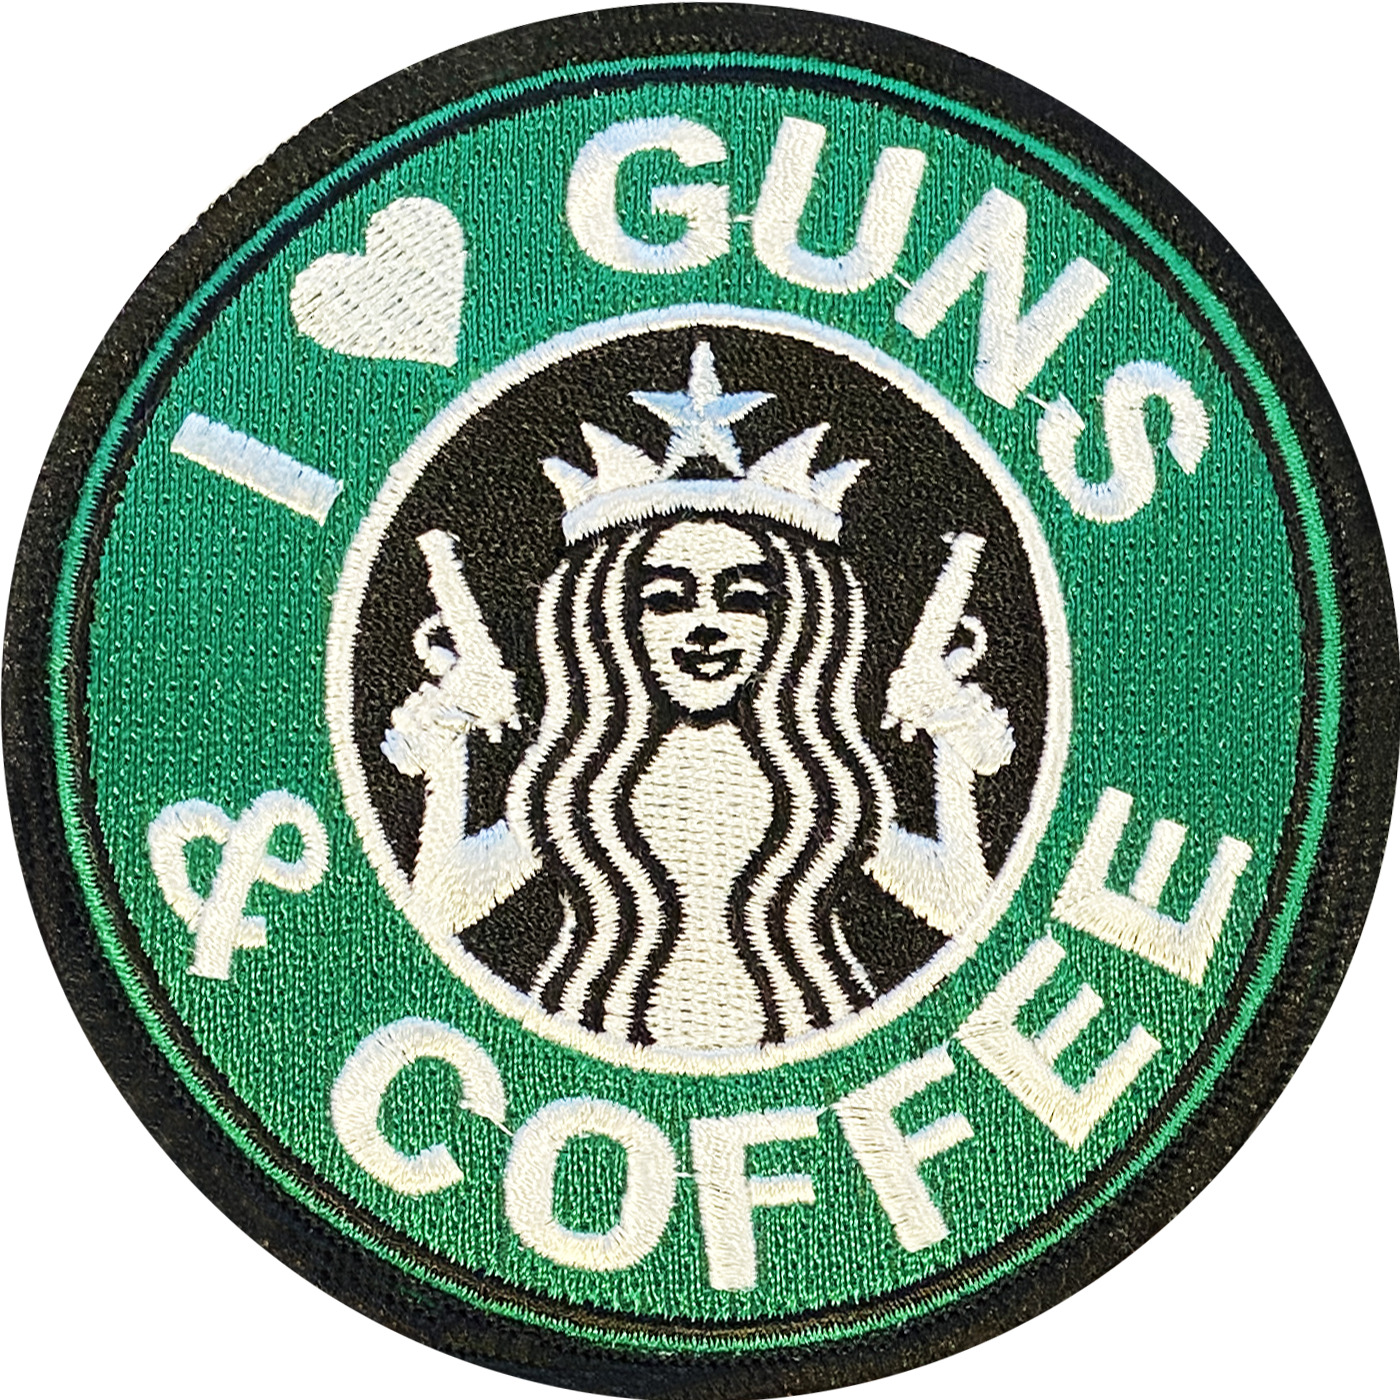 I LOVE GUNS & COFFEE STARBUCKS novelty PATCH